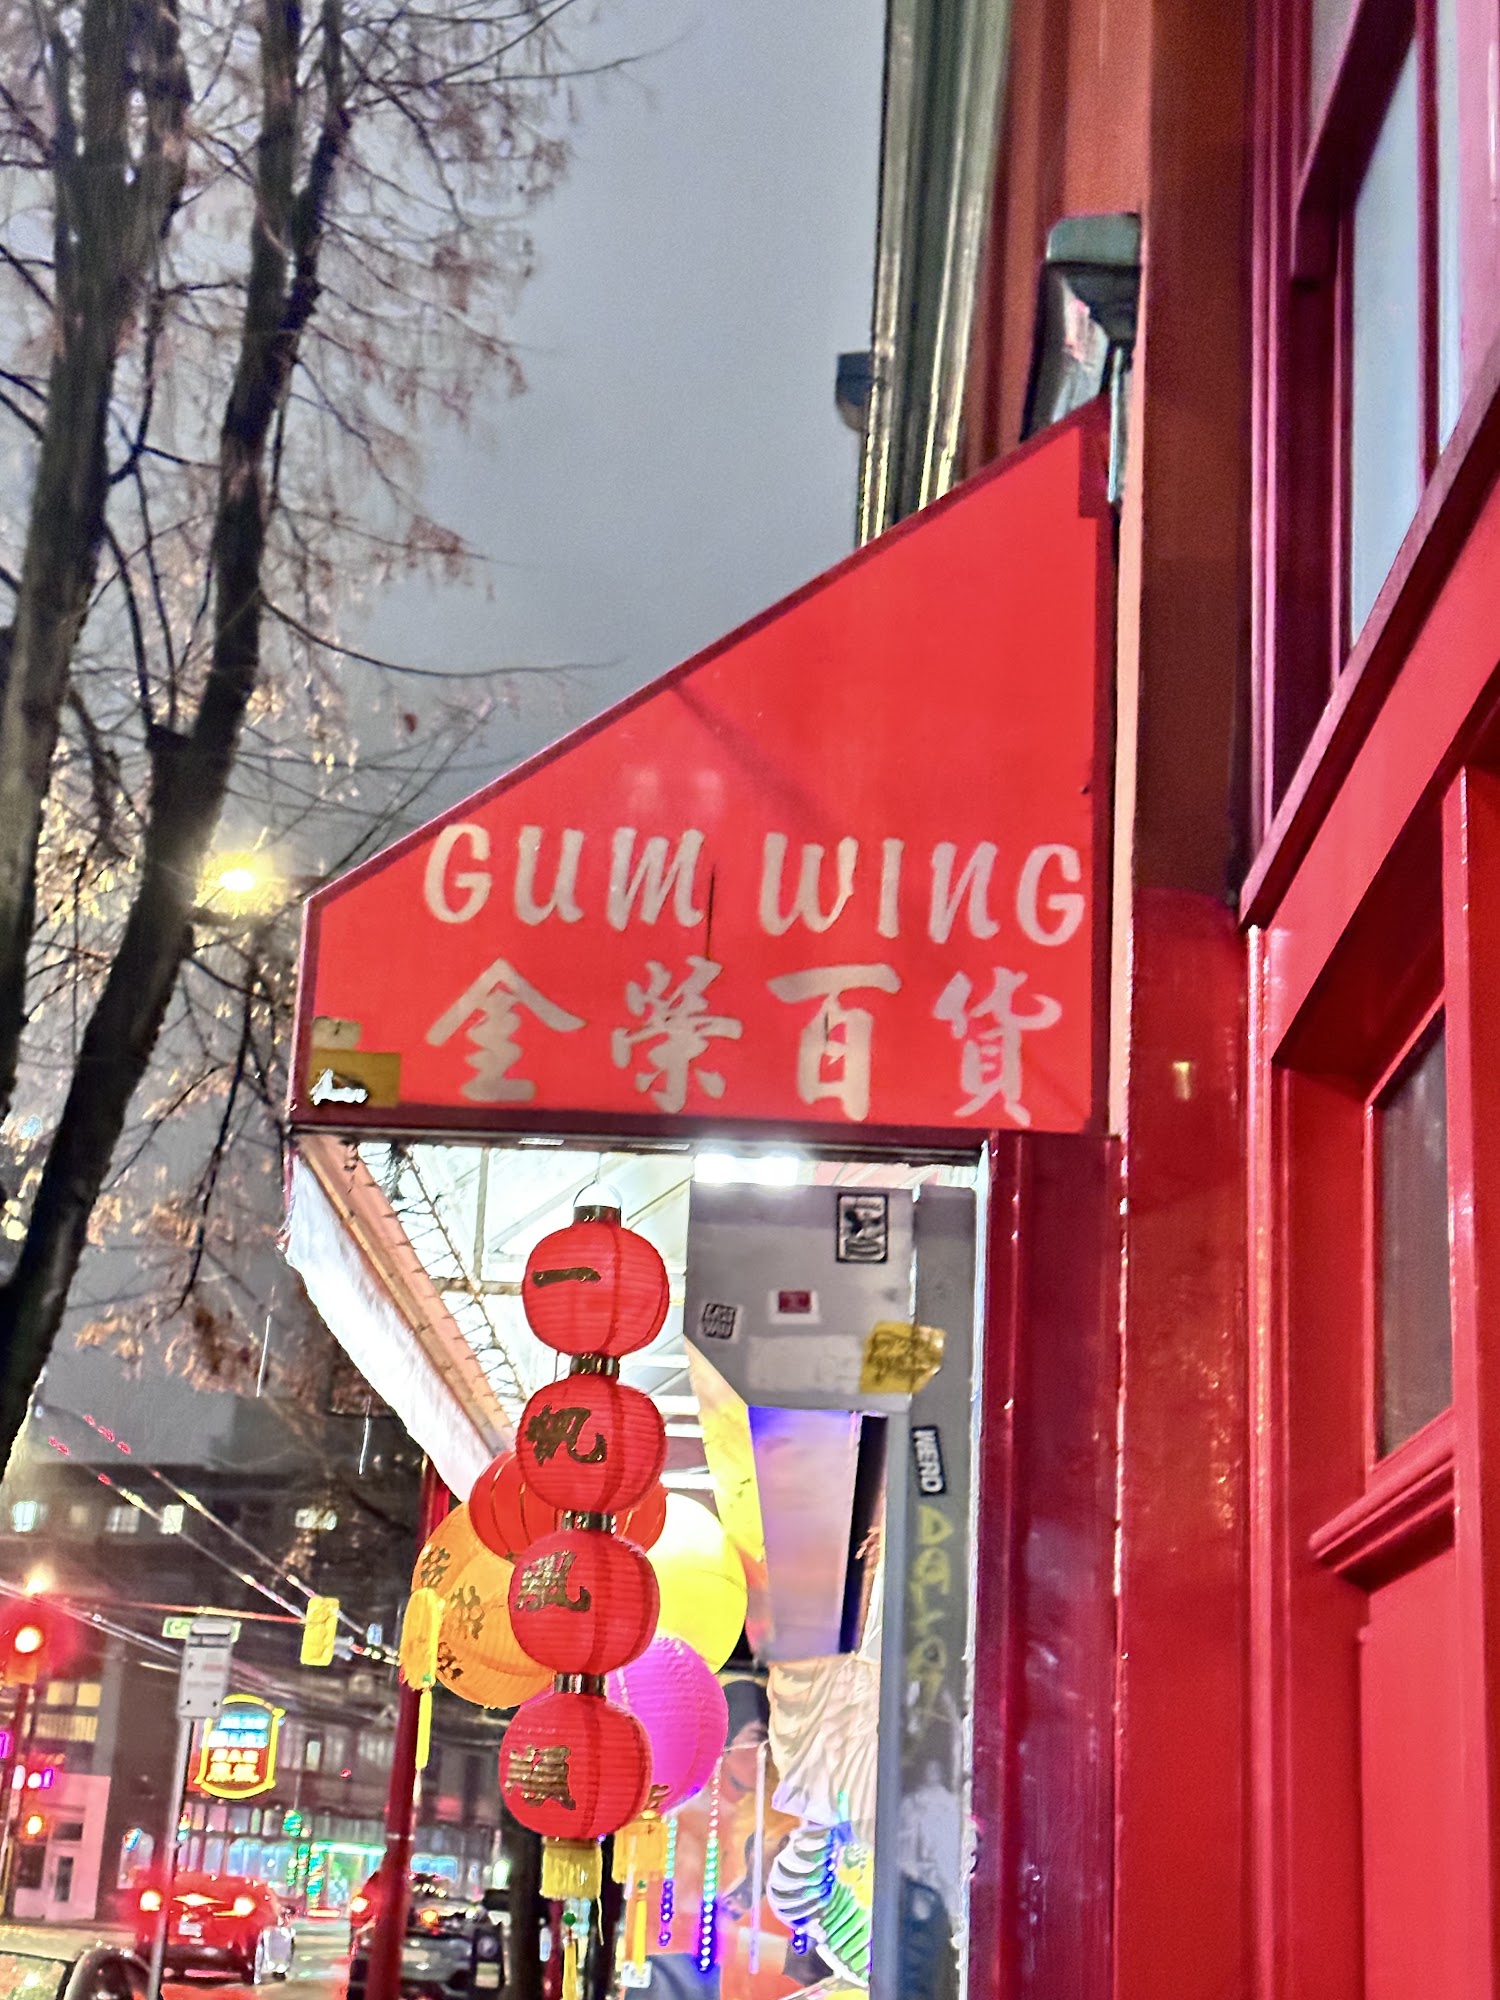 Gum Wing Trading Ltd